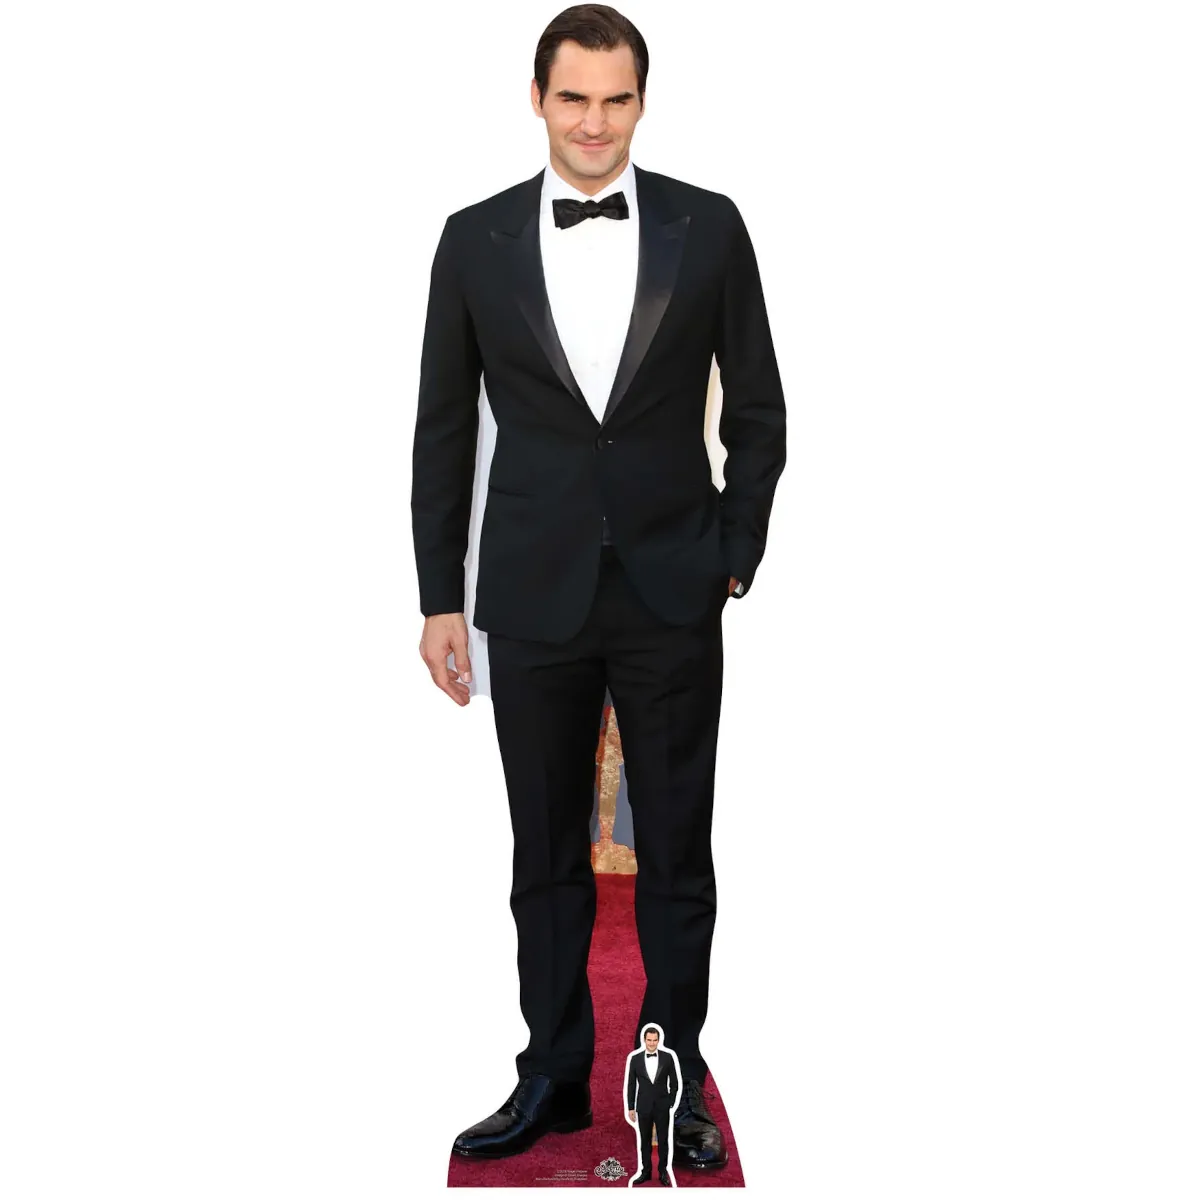 CS674 Roger Federer 'Black Tuxedo' (Swiss Tennis Player) Lifesize + Mini Cardboard Cutout Standee Front